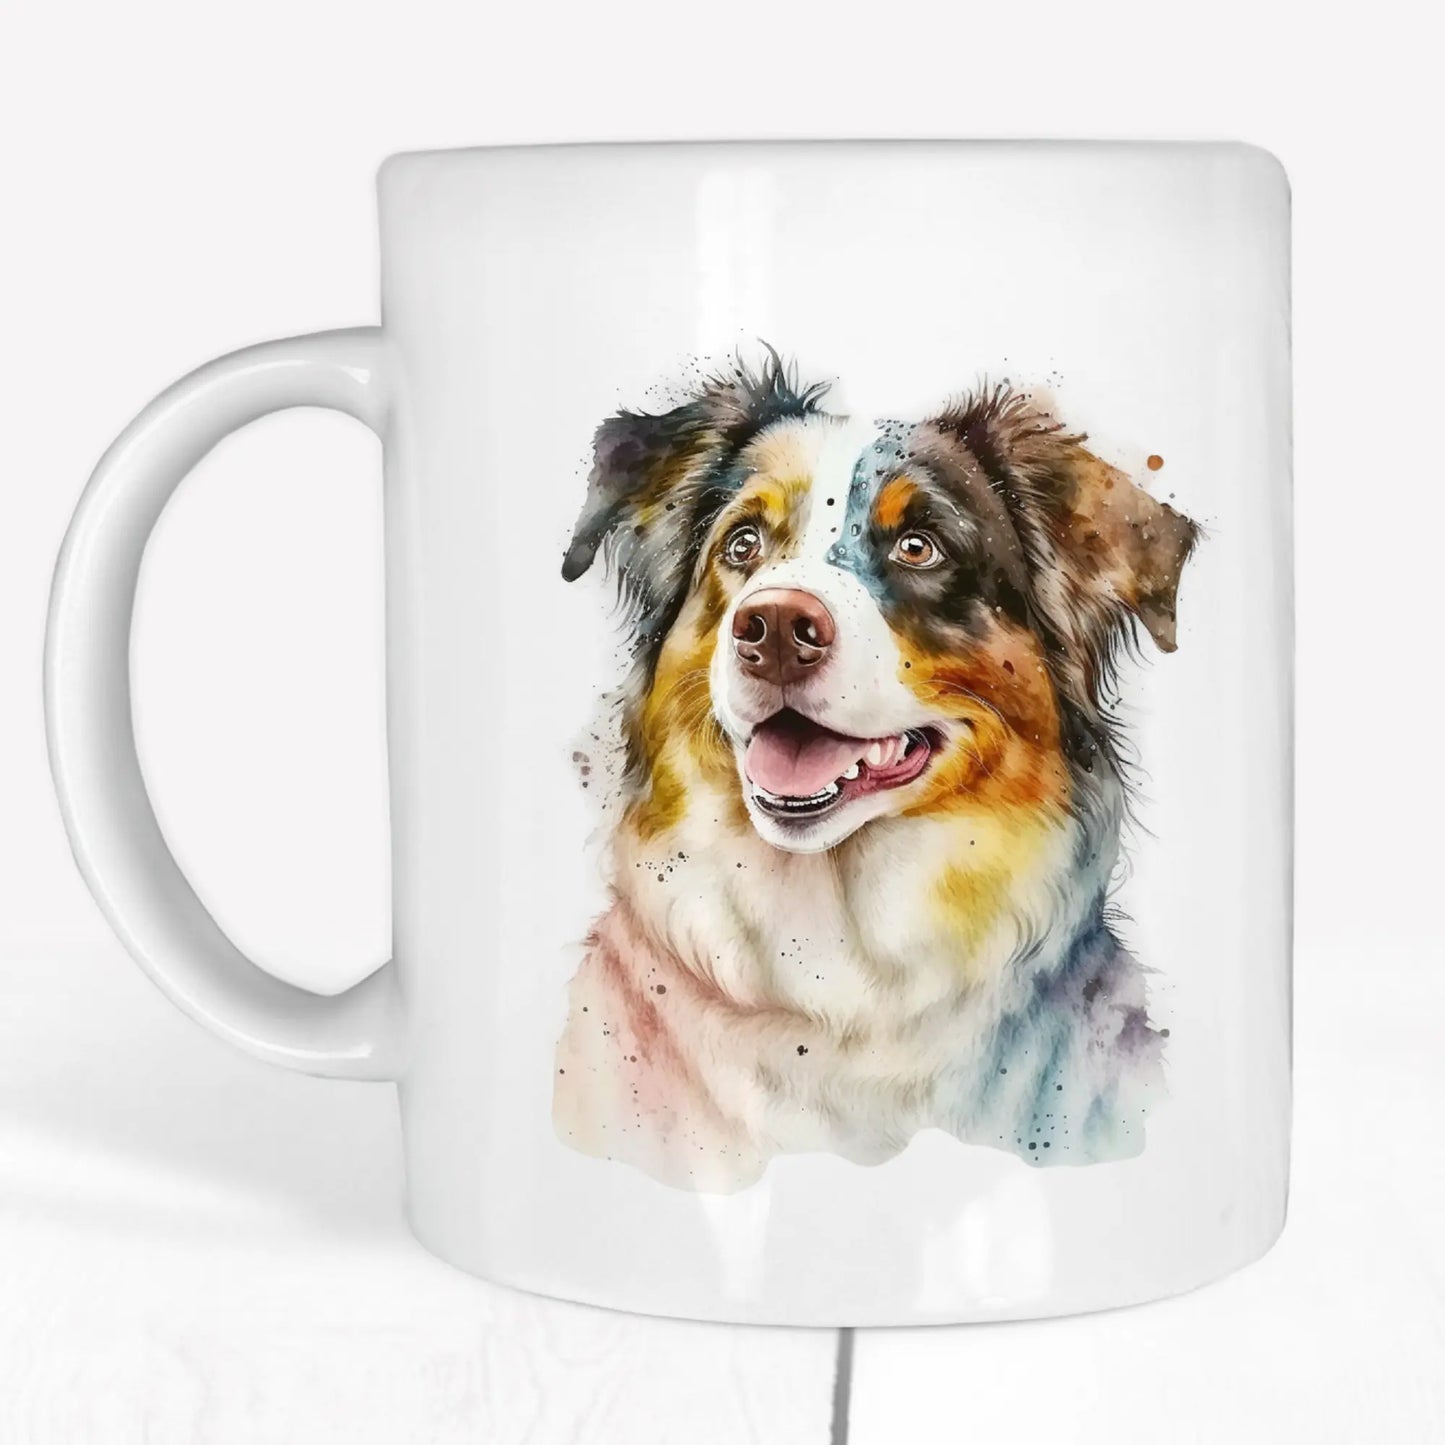  Australian Shepherd Dog Mug by Free Spirit Accessories sold by Free Spirit Accessories